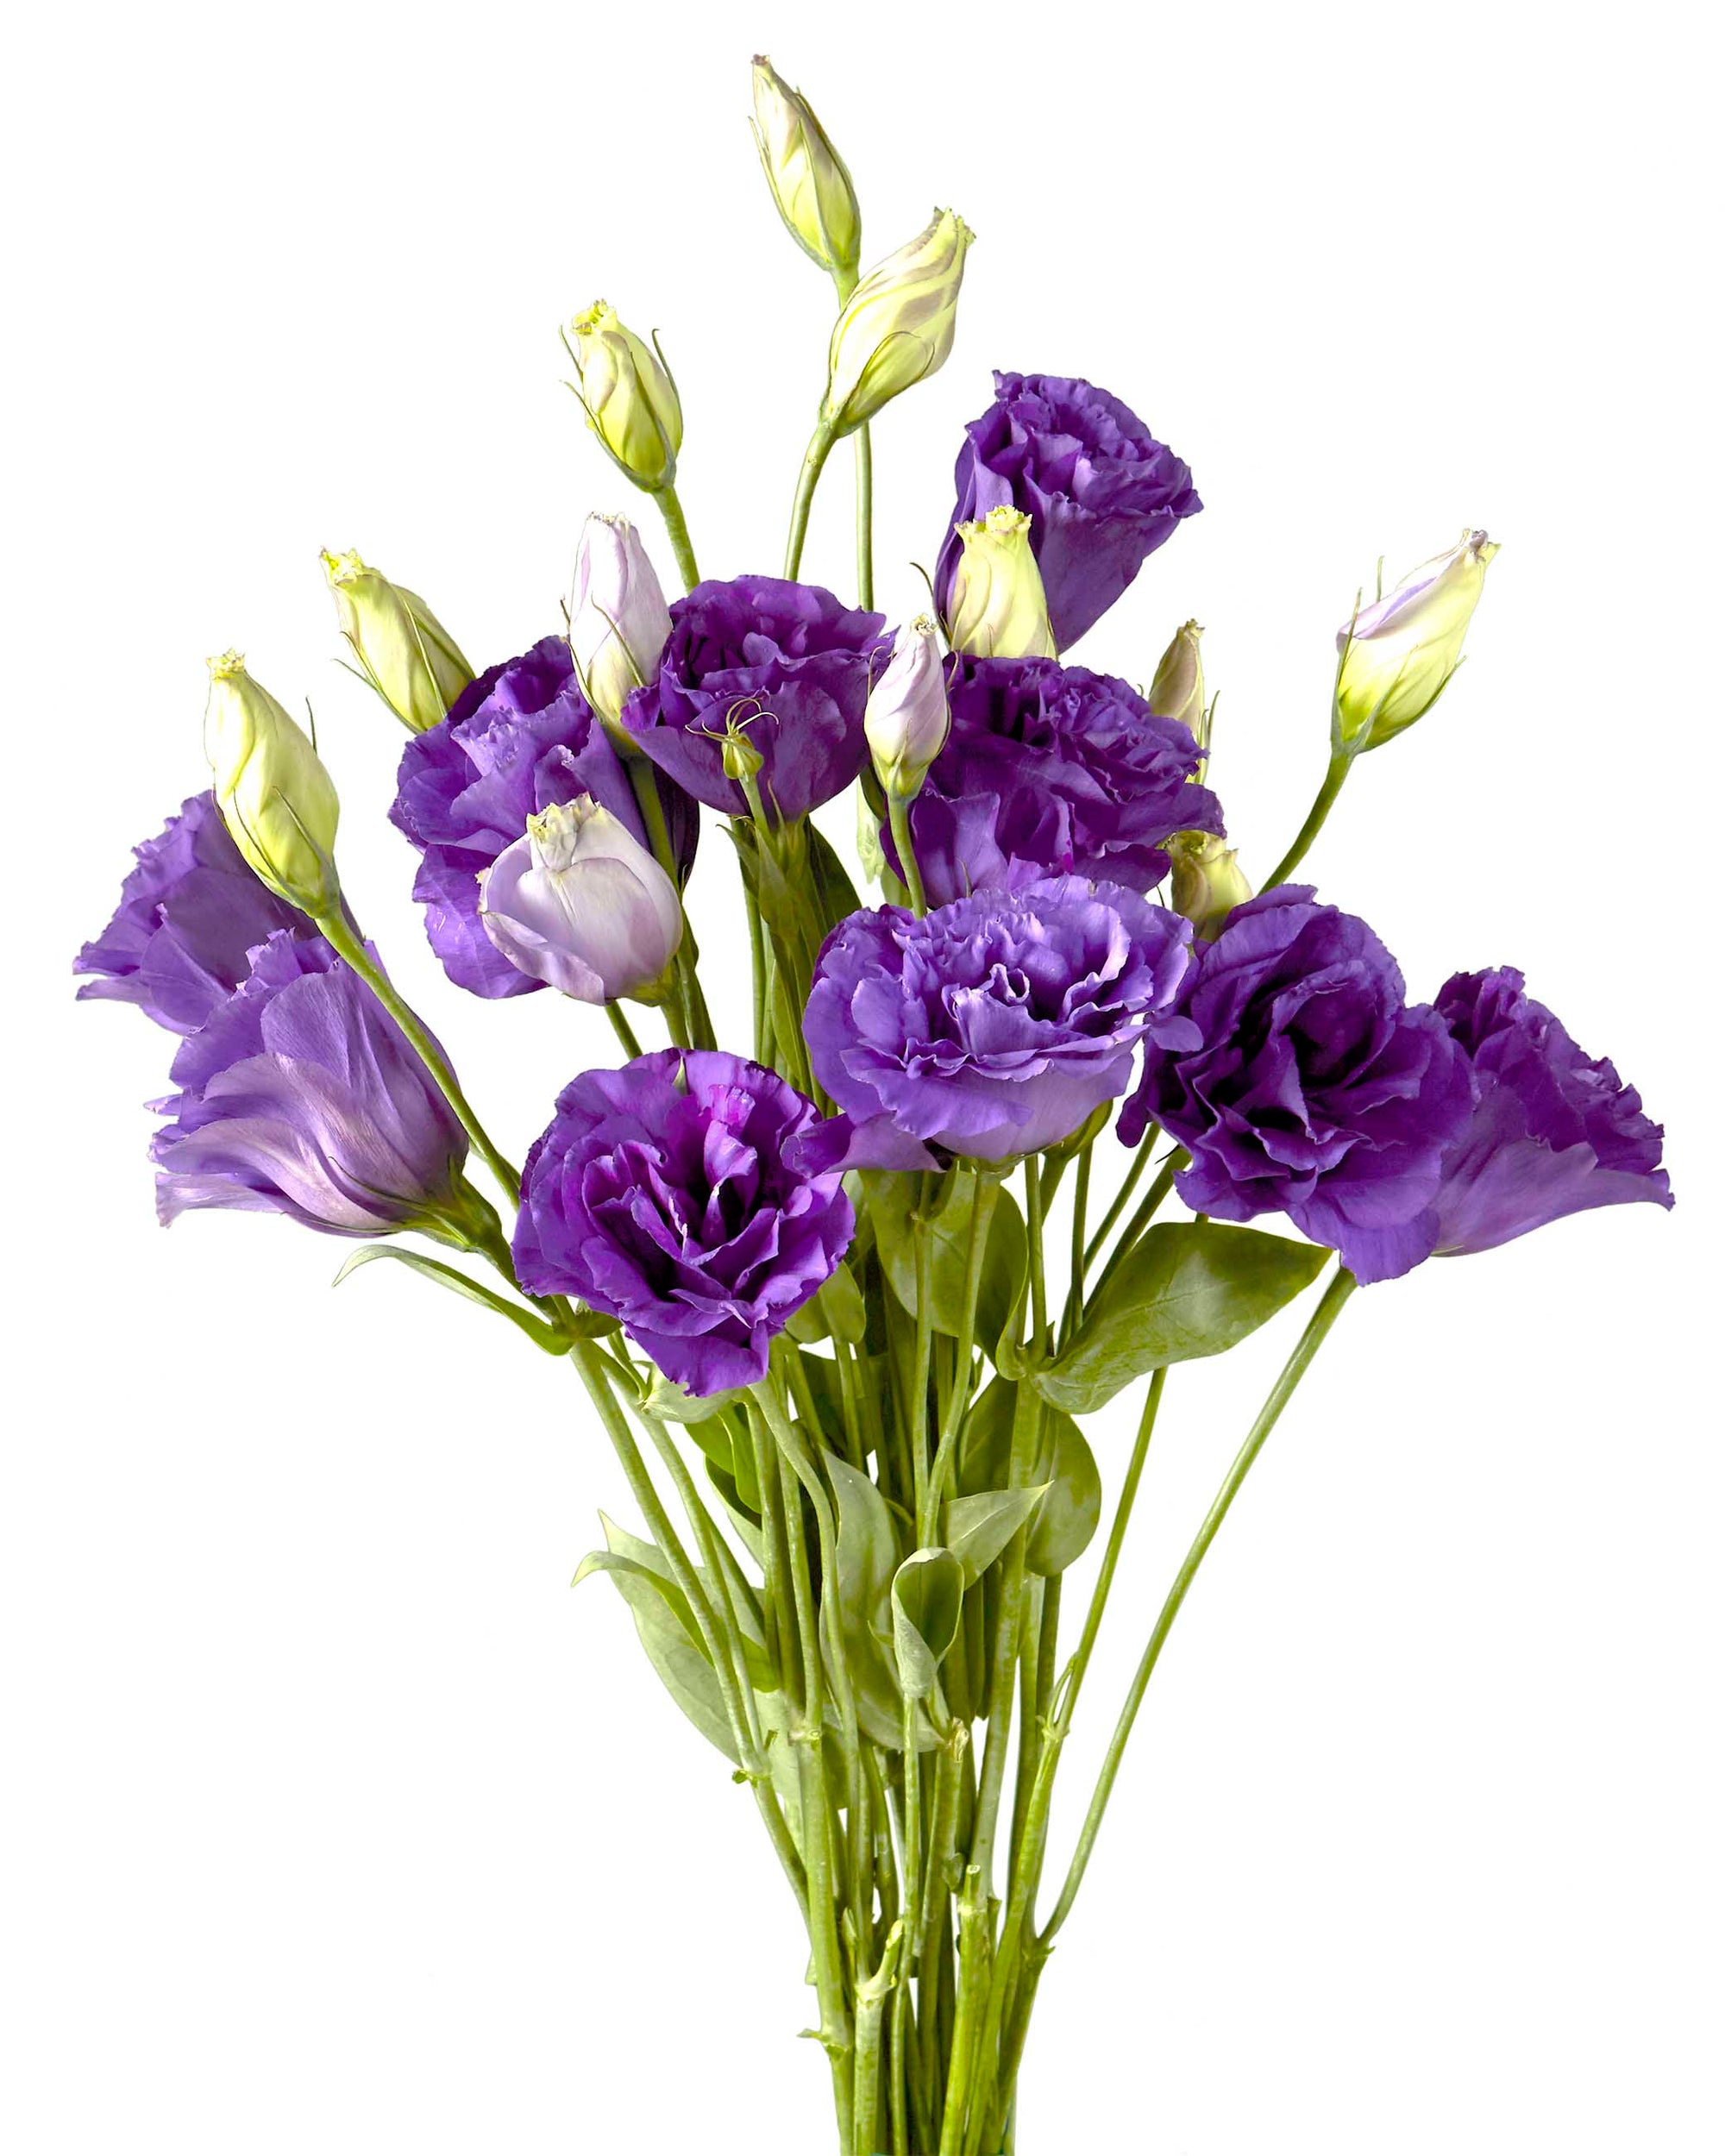 Balboa Purple Lisianthus Mother's Day